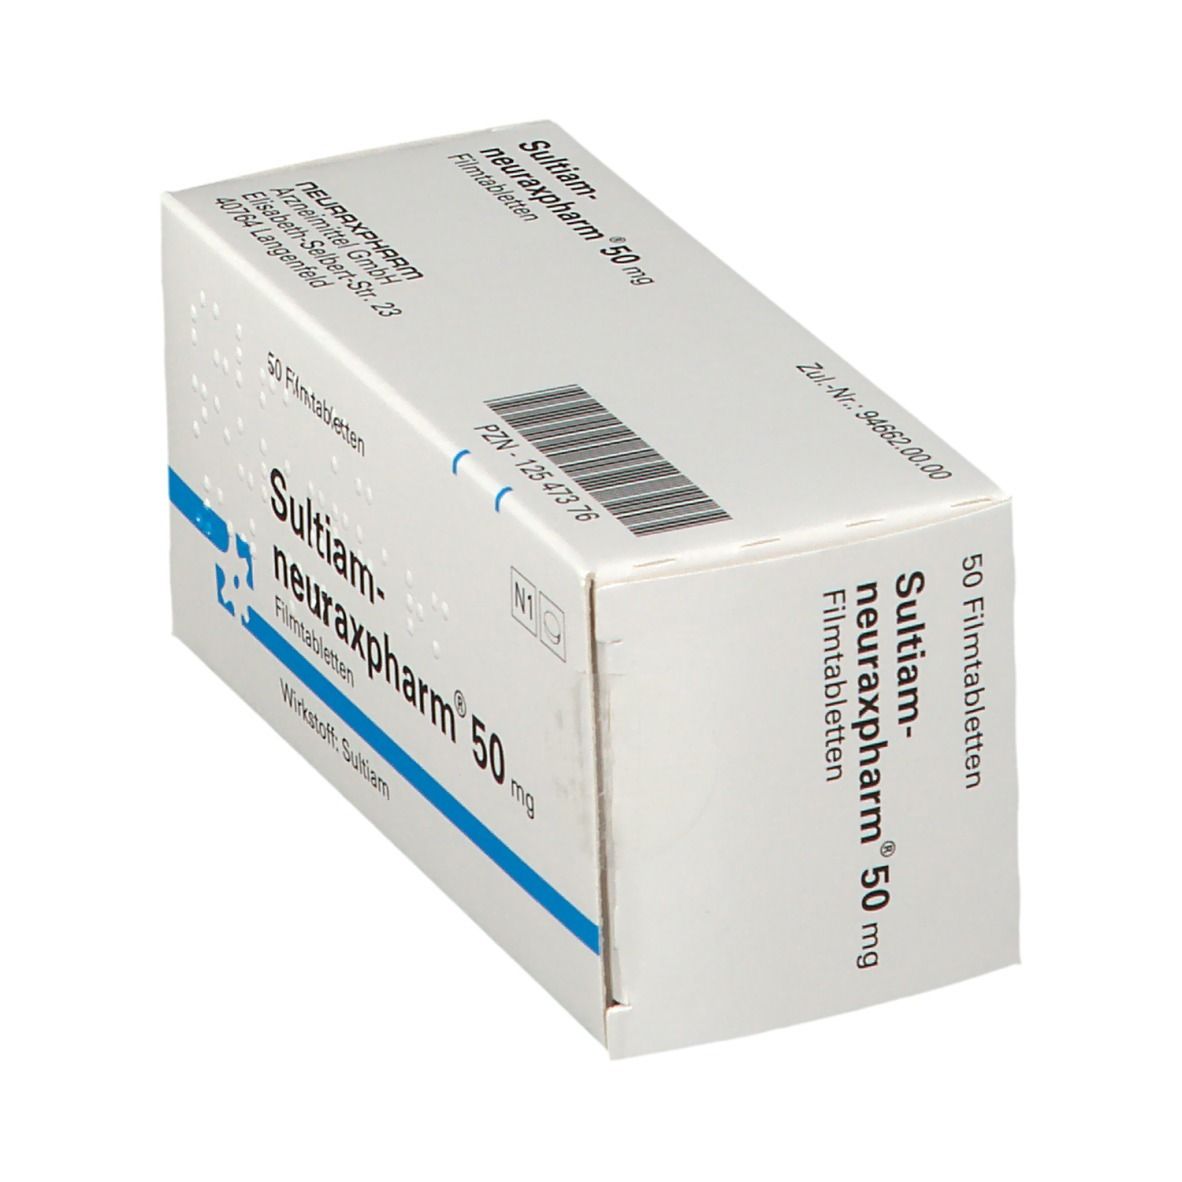 Sultiam-neuraxpharm® 50 mg